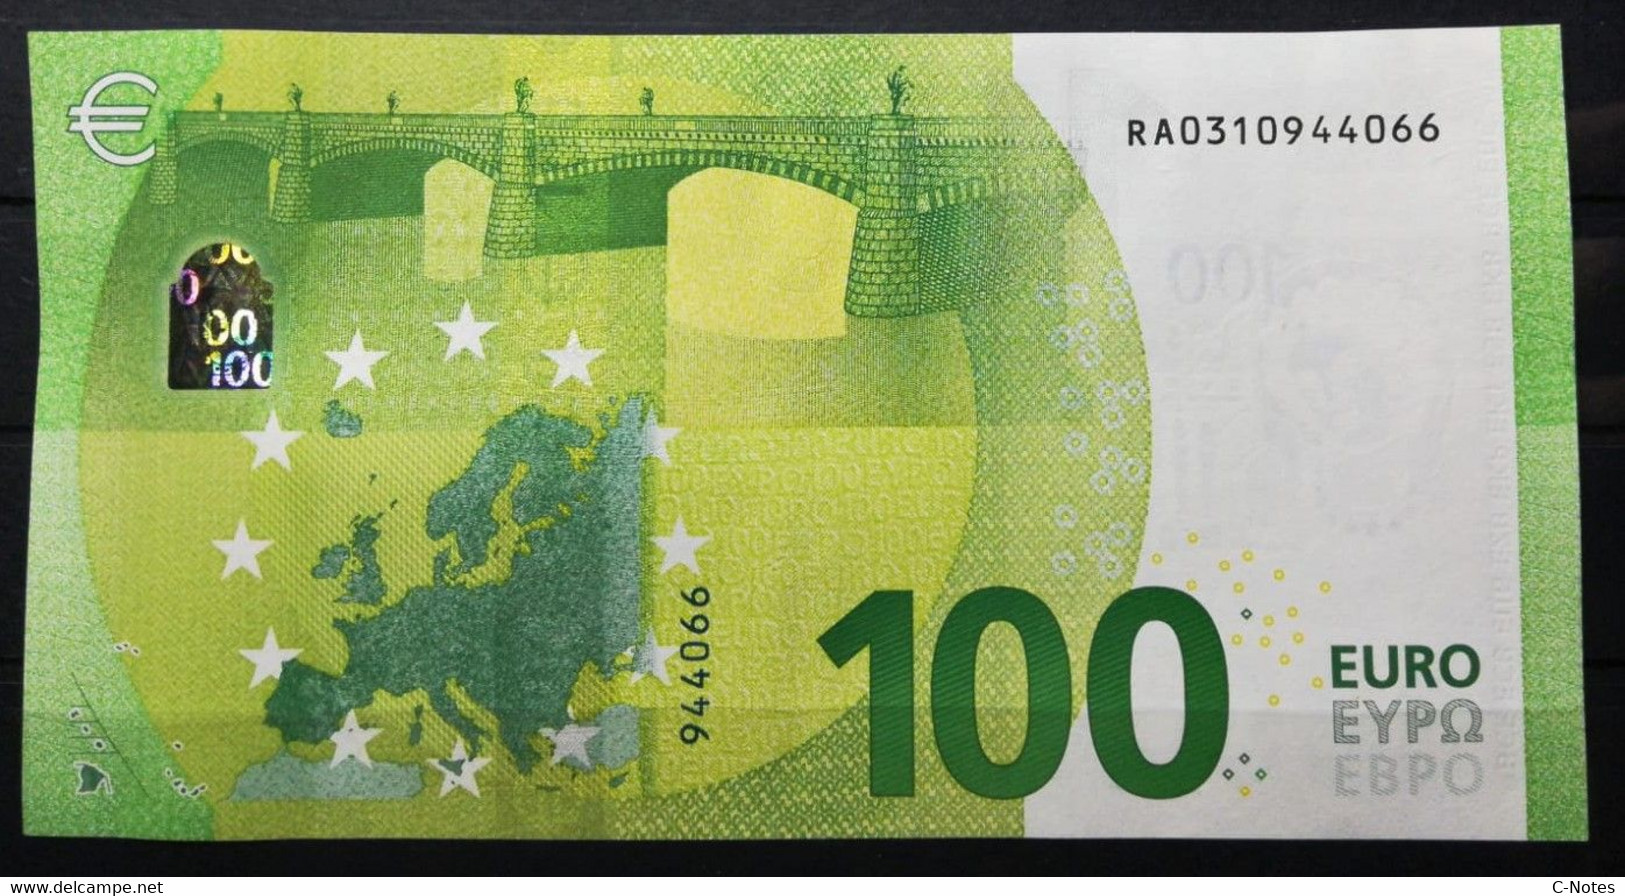 EUROPEAN CENTRAL BANK - Germany RA R001A4 - P. NewR – 100 EURO 2019 UNC, Signature DRAGHI Serie RA0310944066  - RARE - - 100 Euro